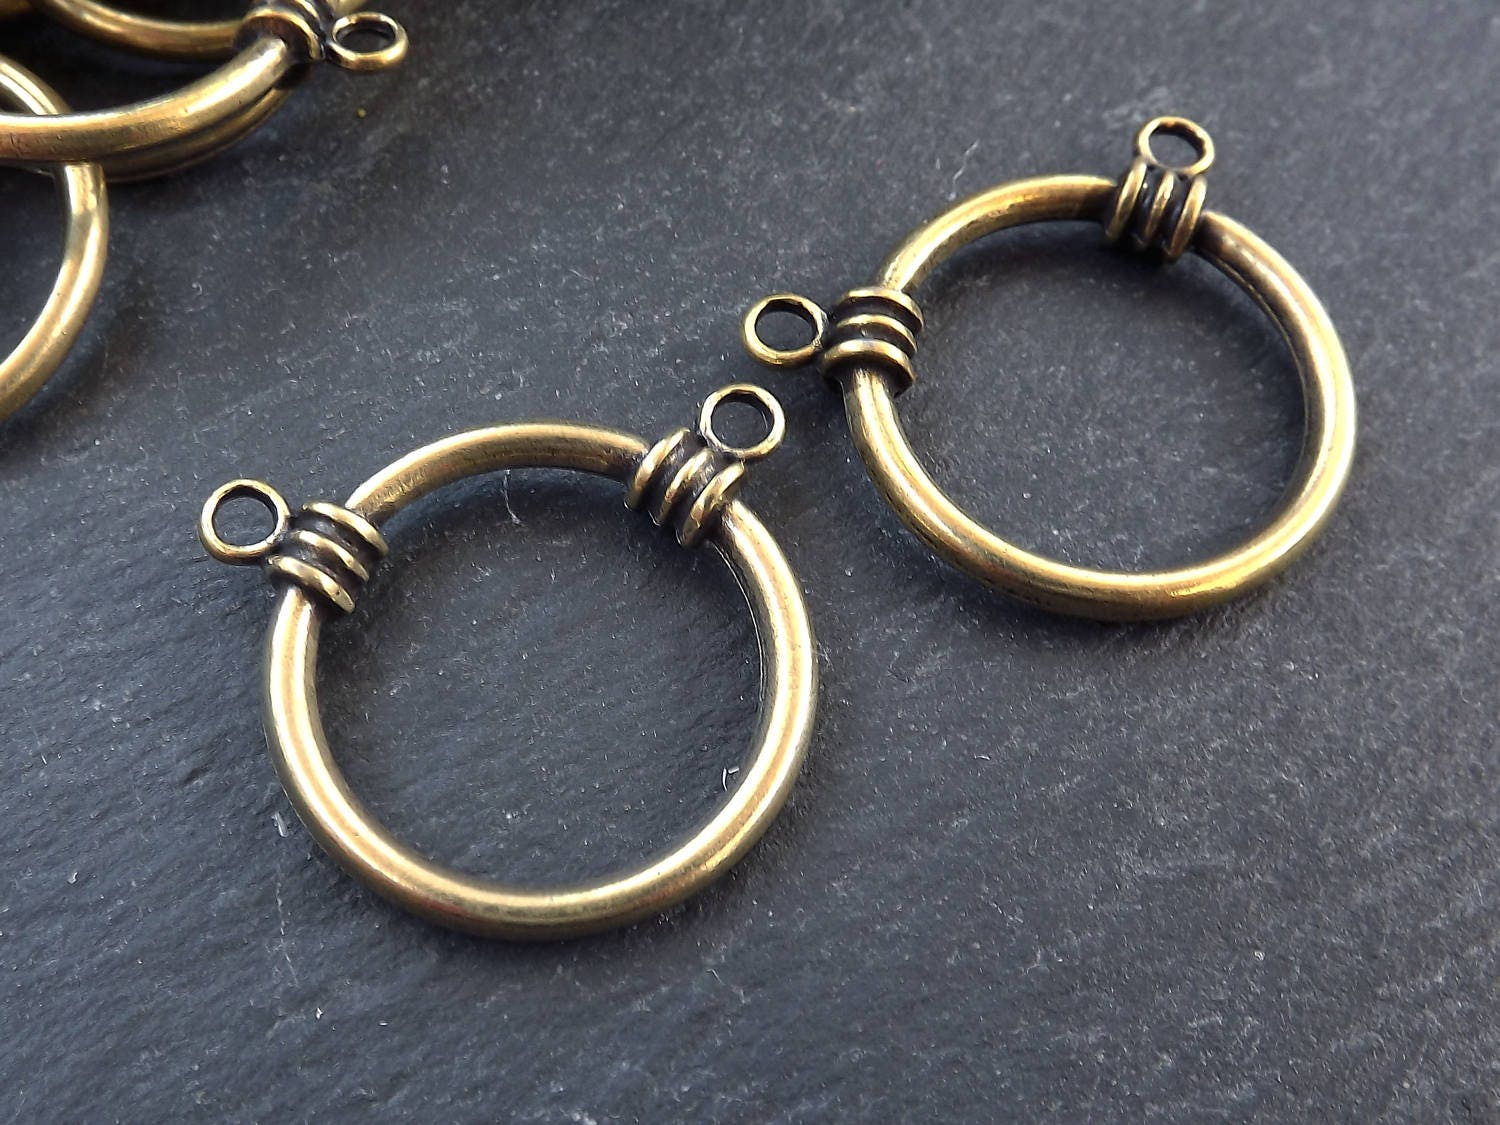 Bronze Loop Pendant, Ring Pendant, Round Ring, Closed Loop Pendant, Loop Connector, Ring Connector, Two Loops, Antique Bronze Plated 2pc